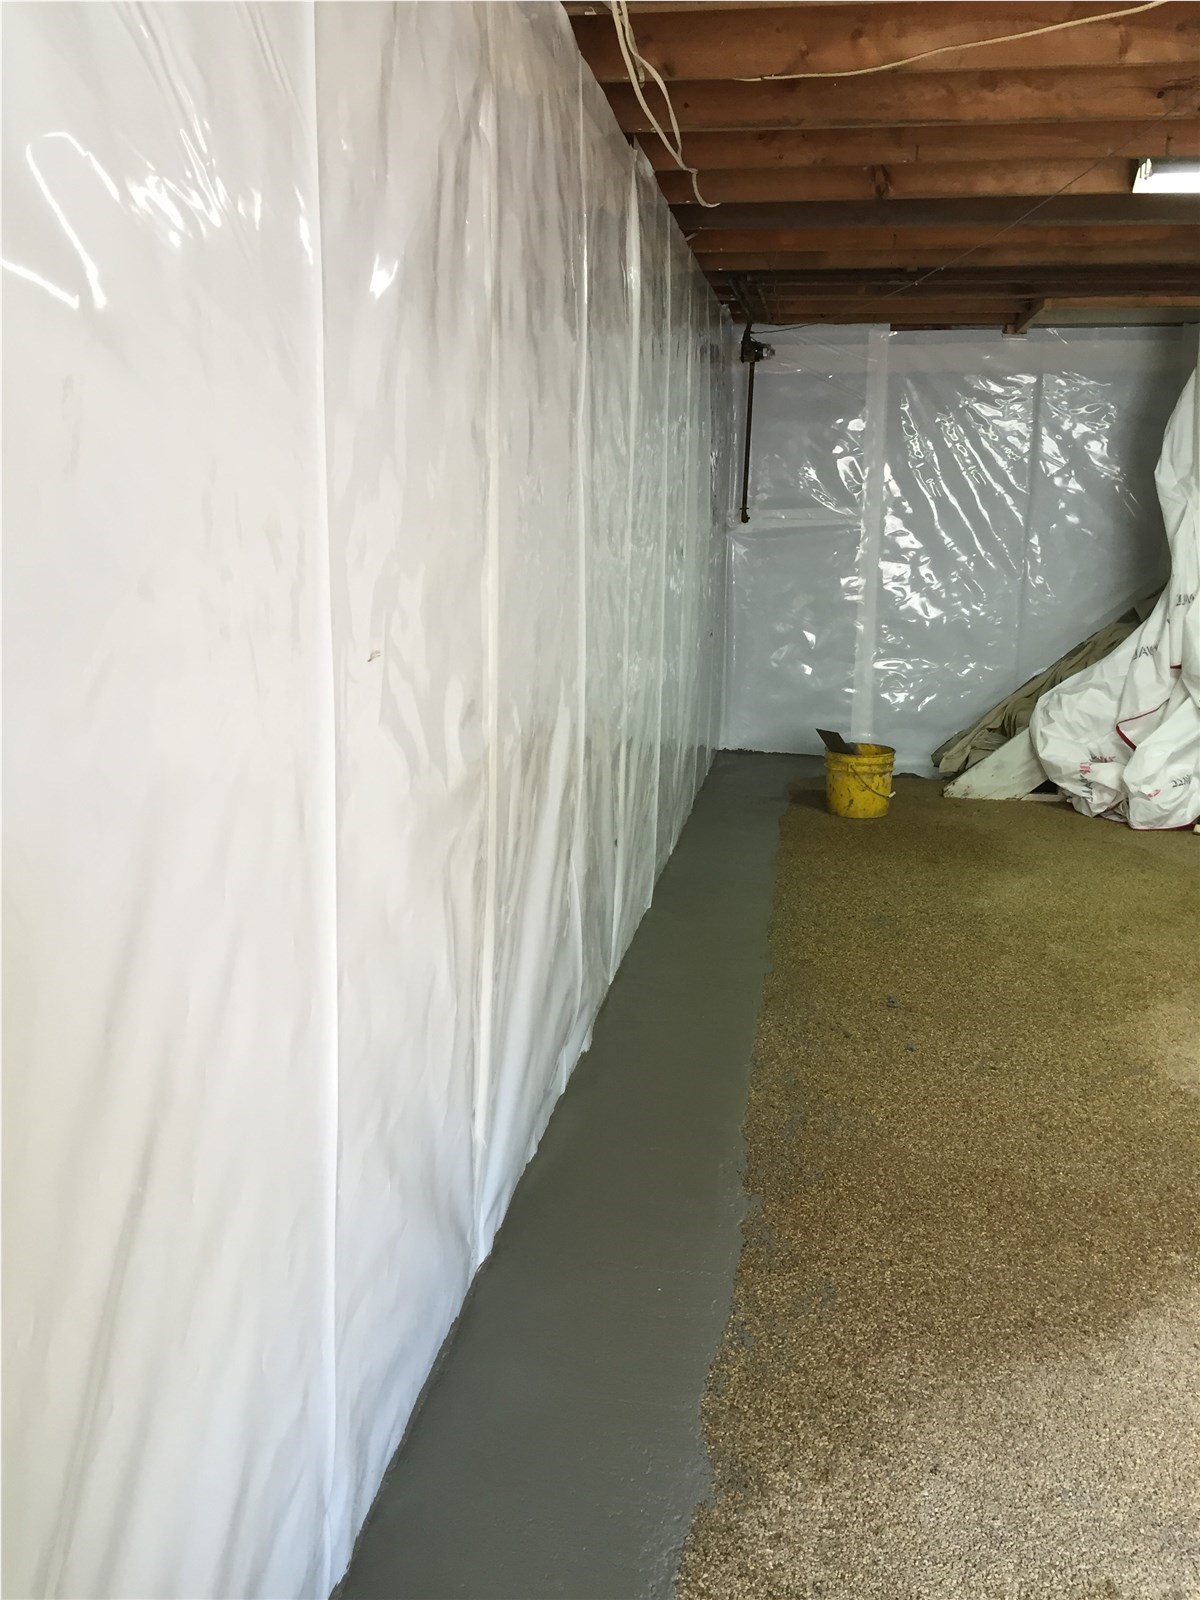 basement waterproofing membrane